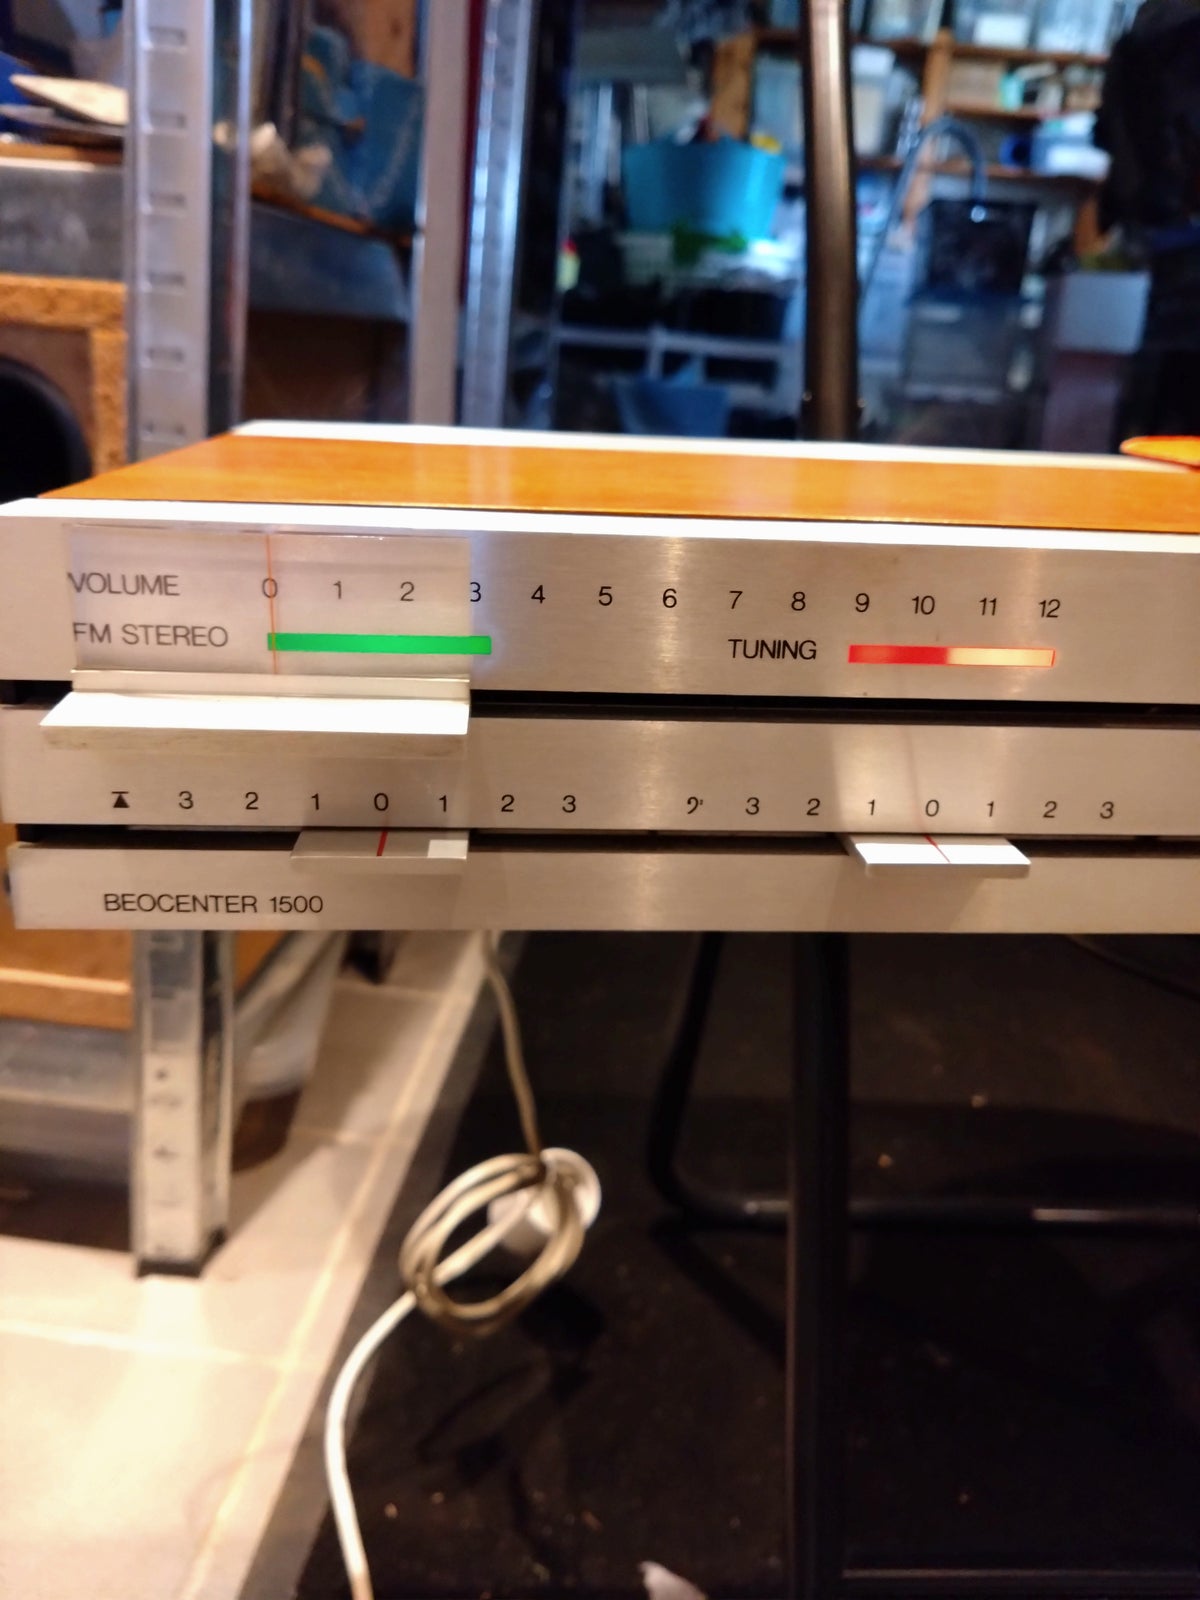 AM/FM radio, Bang & Olufsen, Beocenter 1500